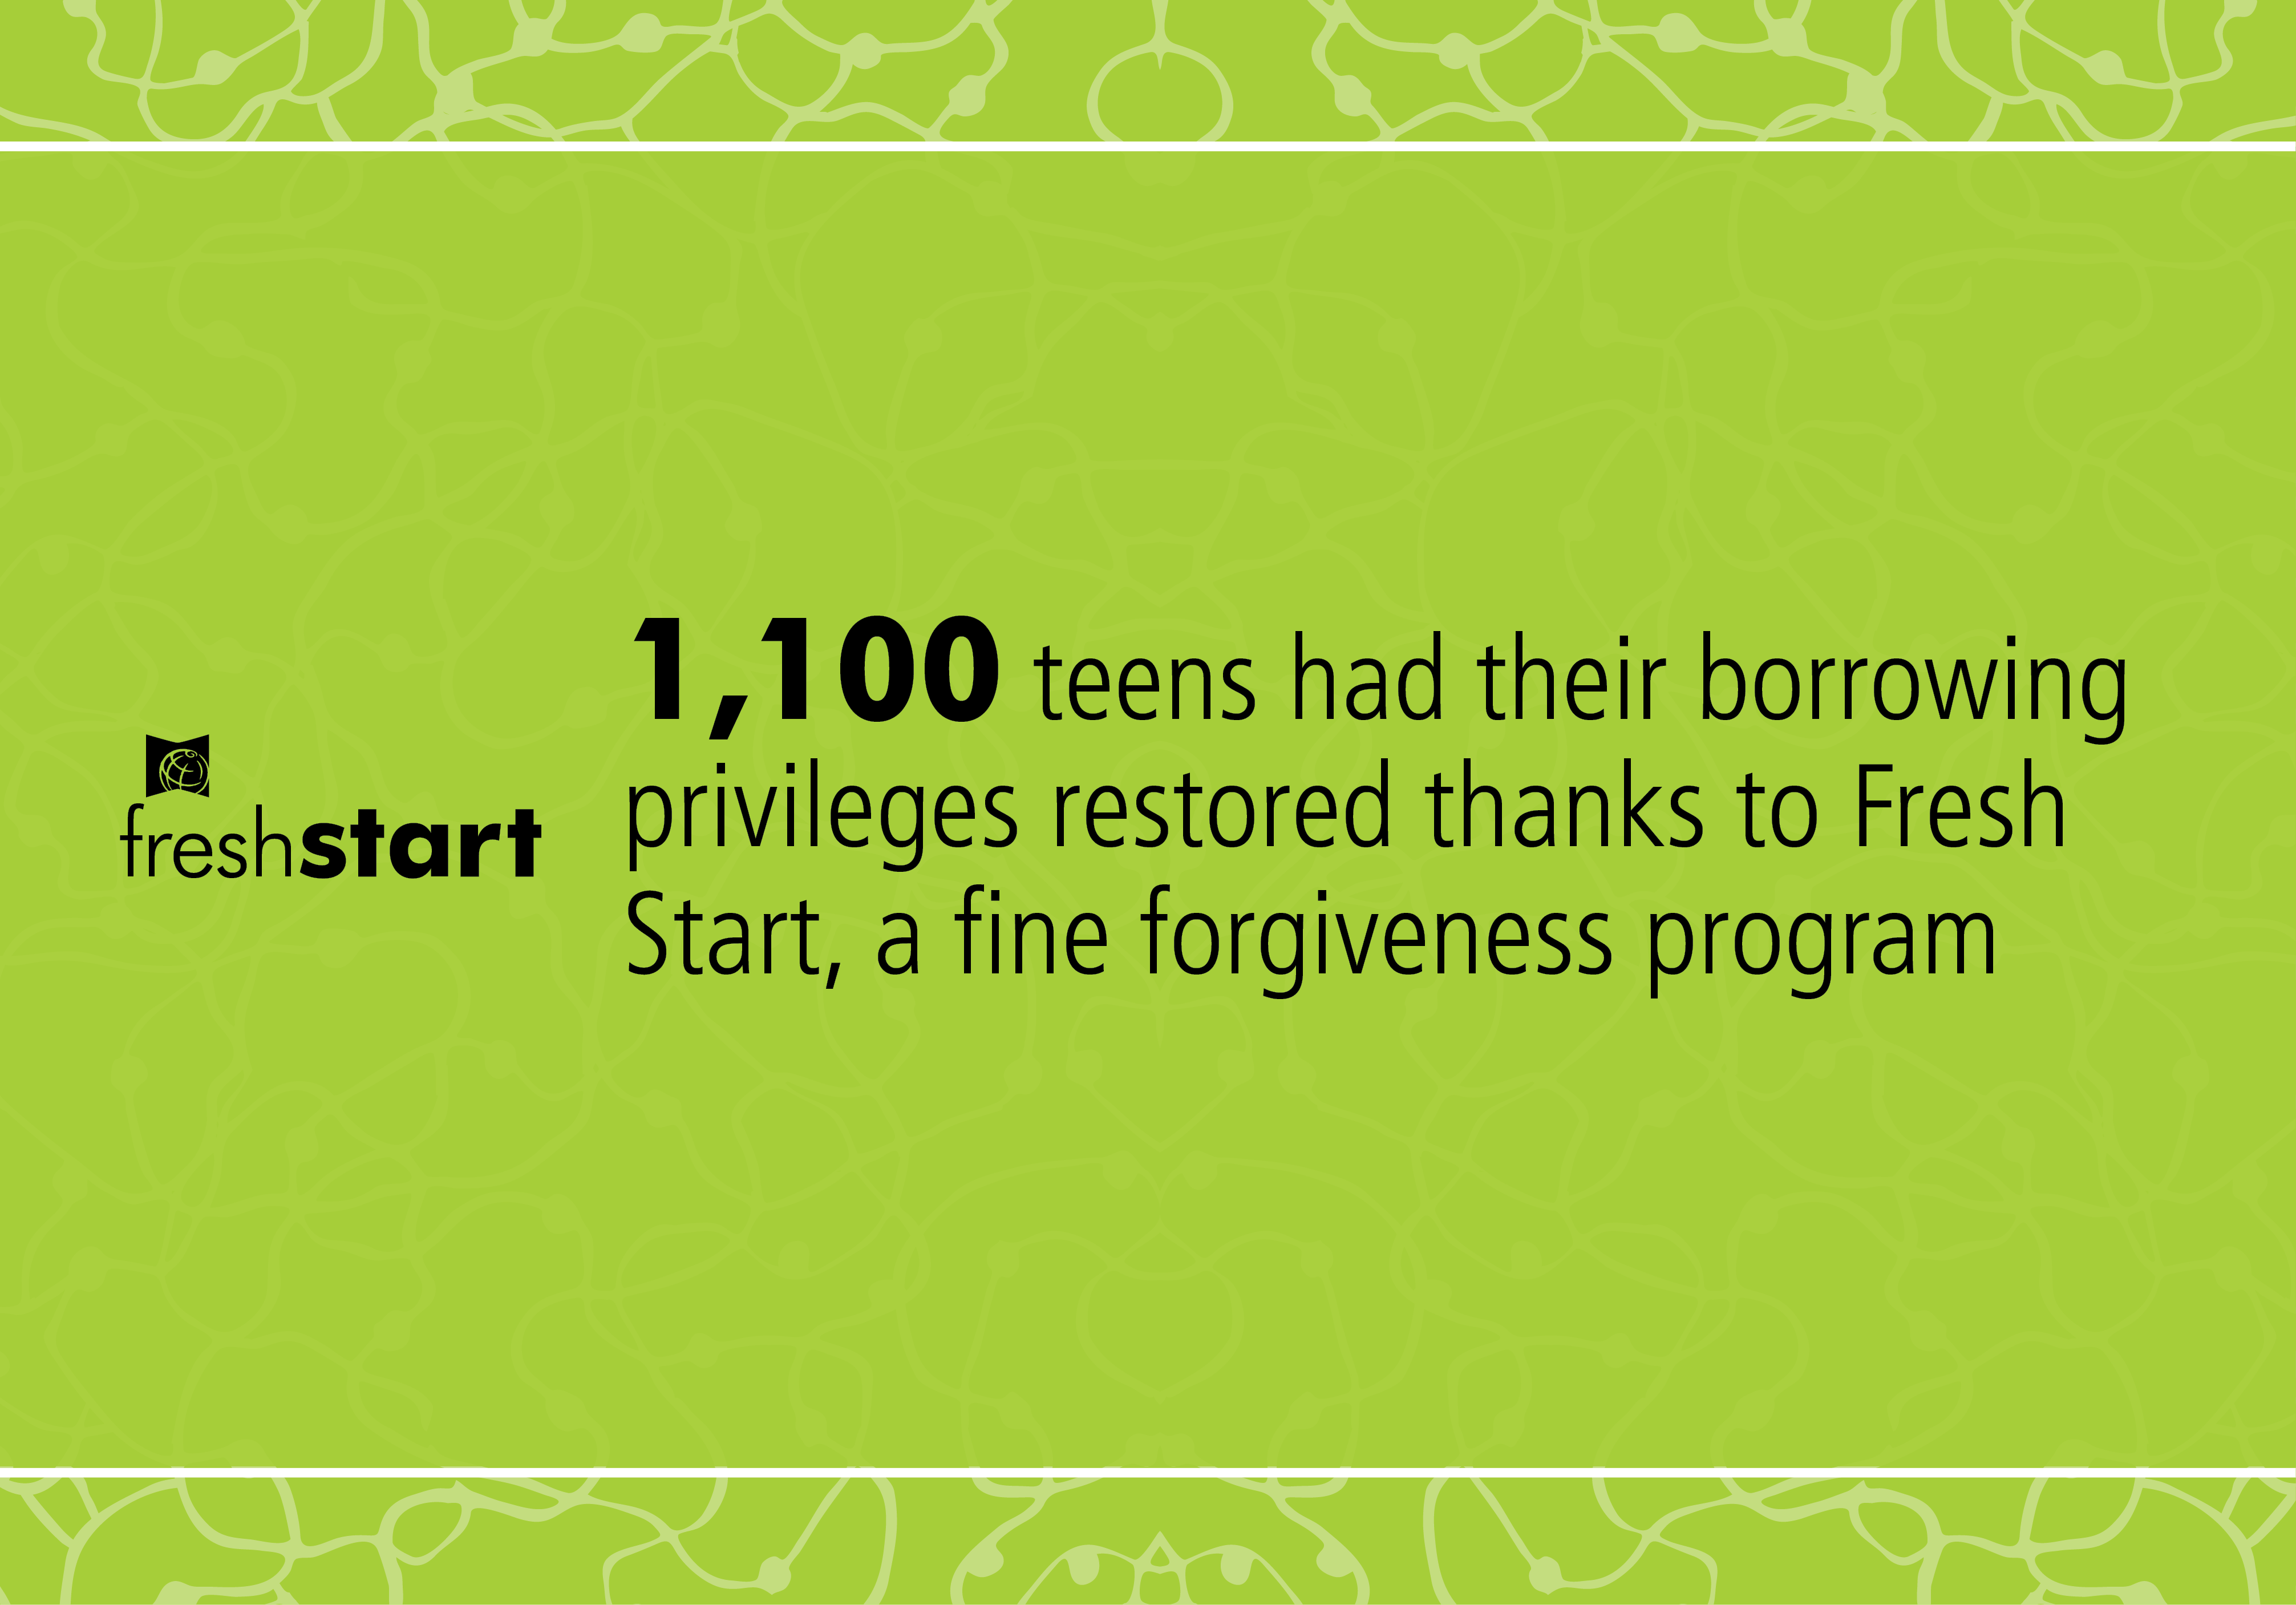 1,100 teens had their borrowing privileges restored thanks to Fresh Start, a fine forgiveness program